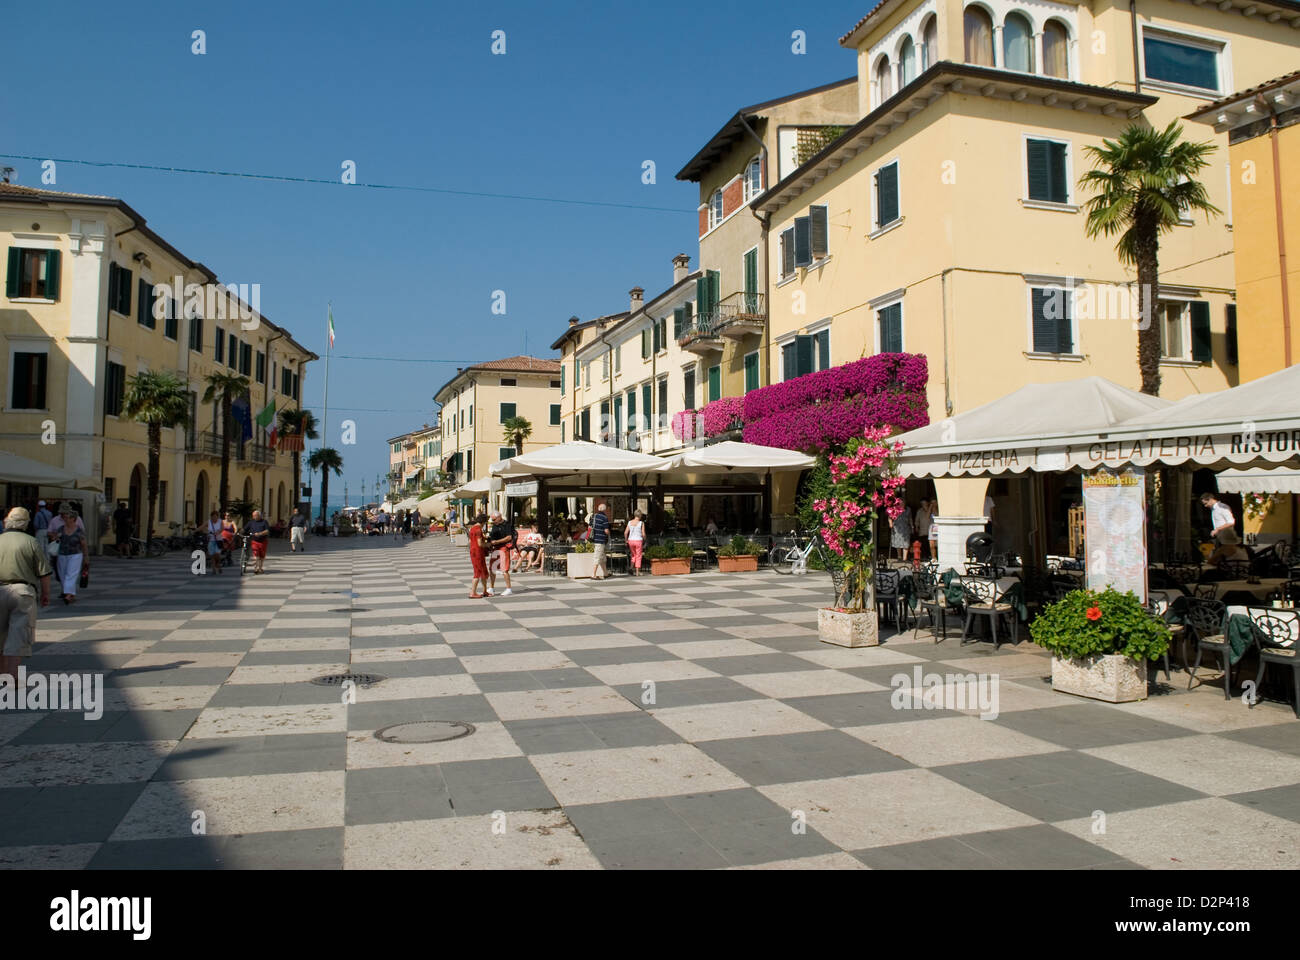 Lasize Veneto Italy travel tourism Stock Photo